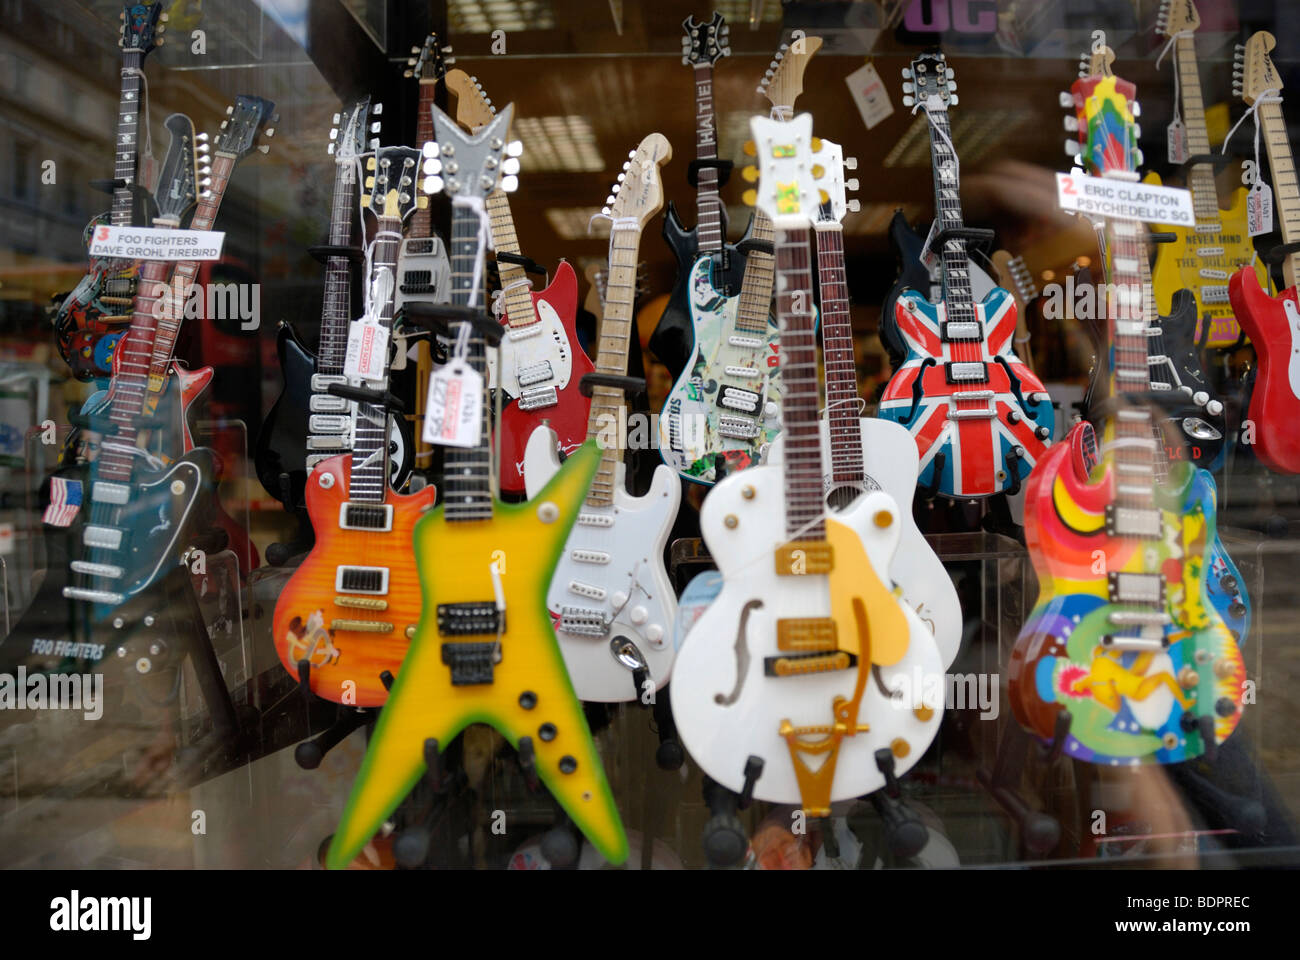 Colourful miniature replicas of electric guitars in a souvenir shop window, London, England, UK Stock Photo